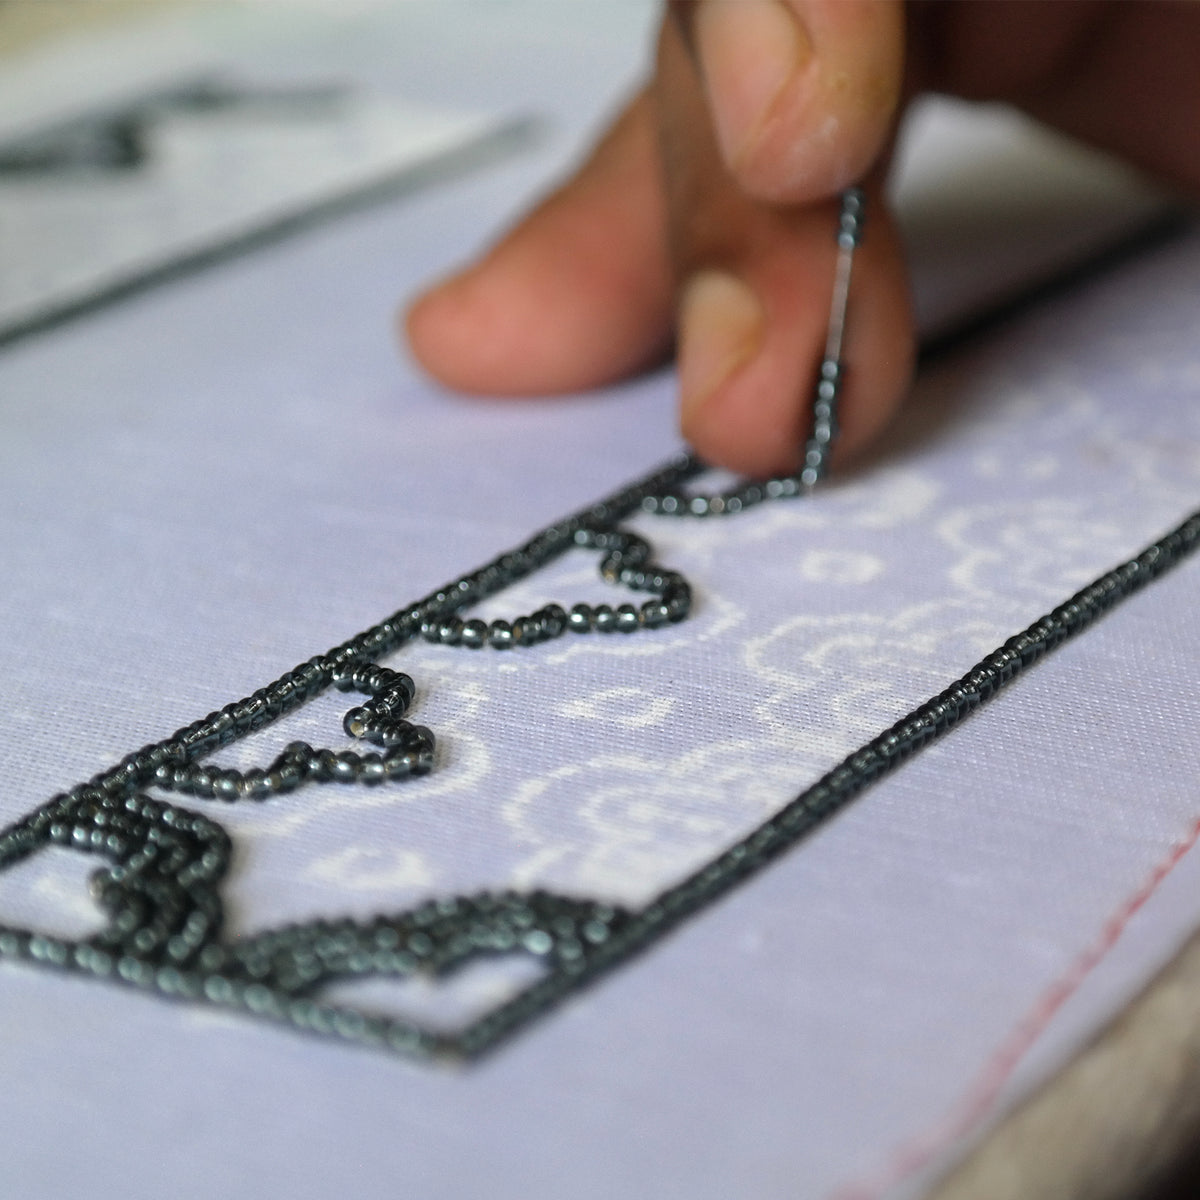 Keeping The Artisanal Craft of Handmade Jewelry Alive